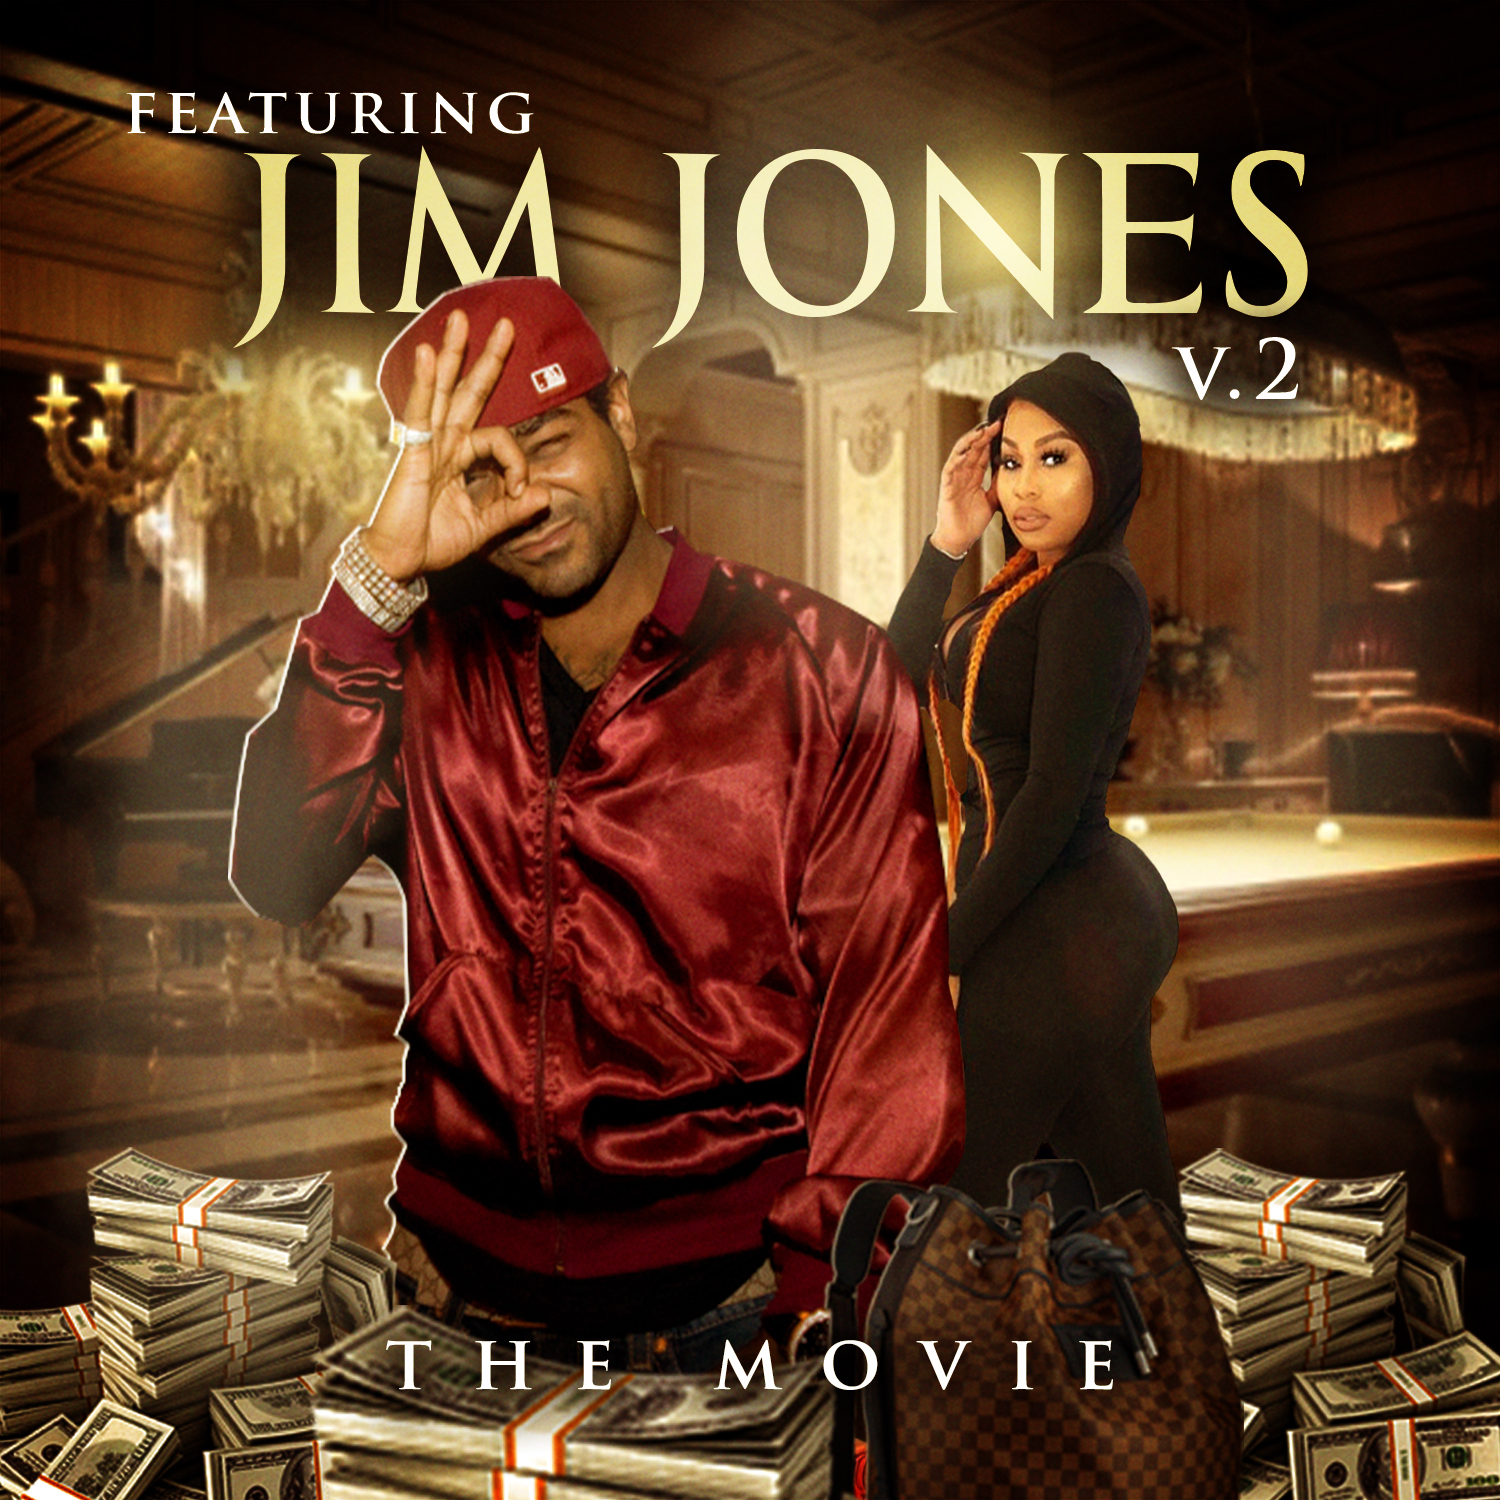 (Mixtape) Featuring jim jones v.2 (hosted by @samhoody) @jimjonescapo